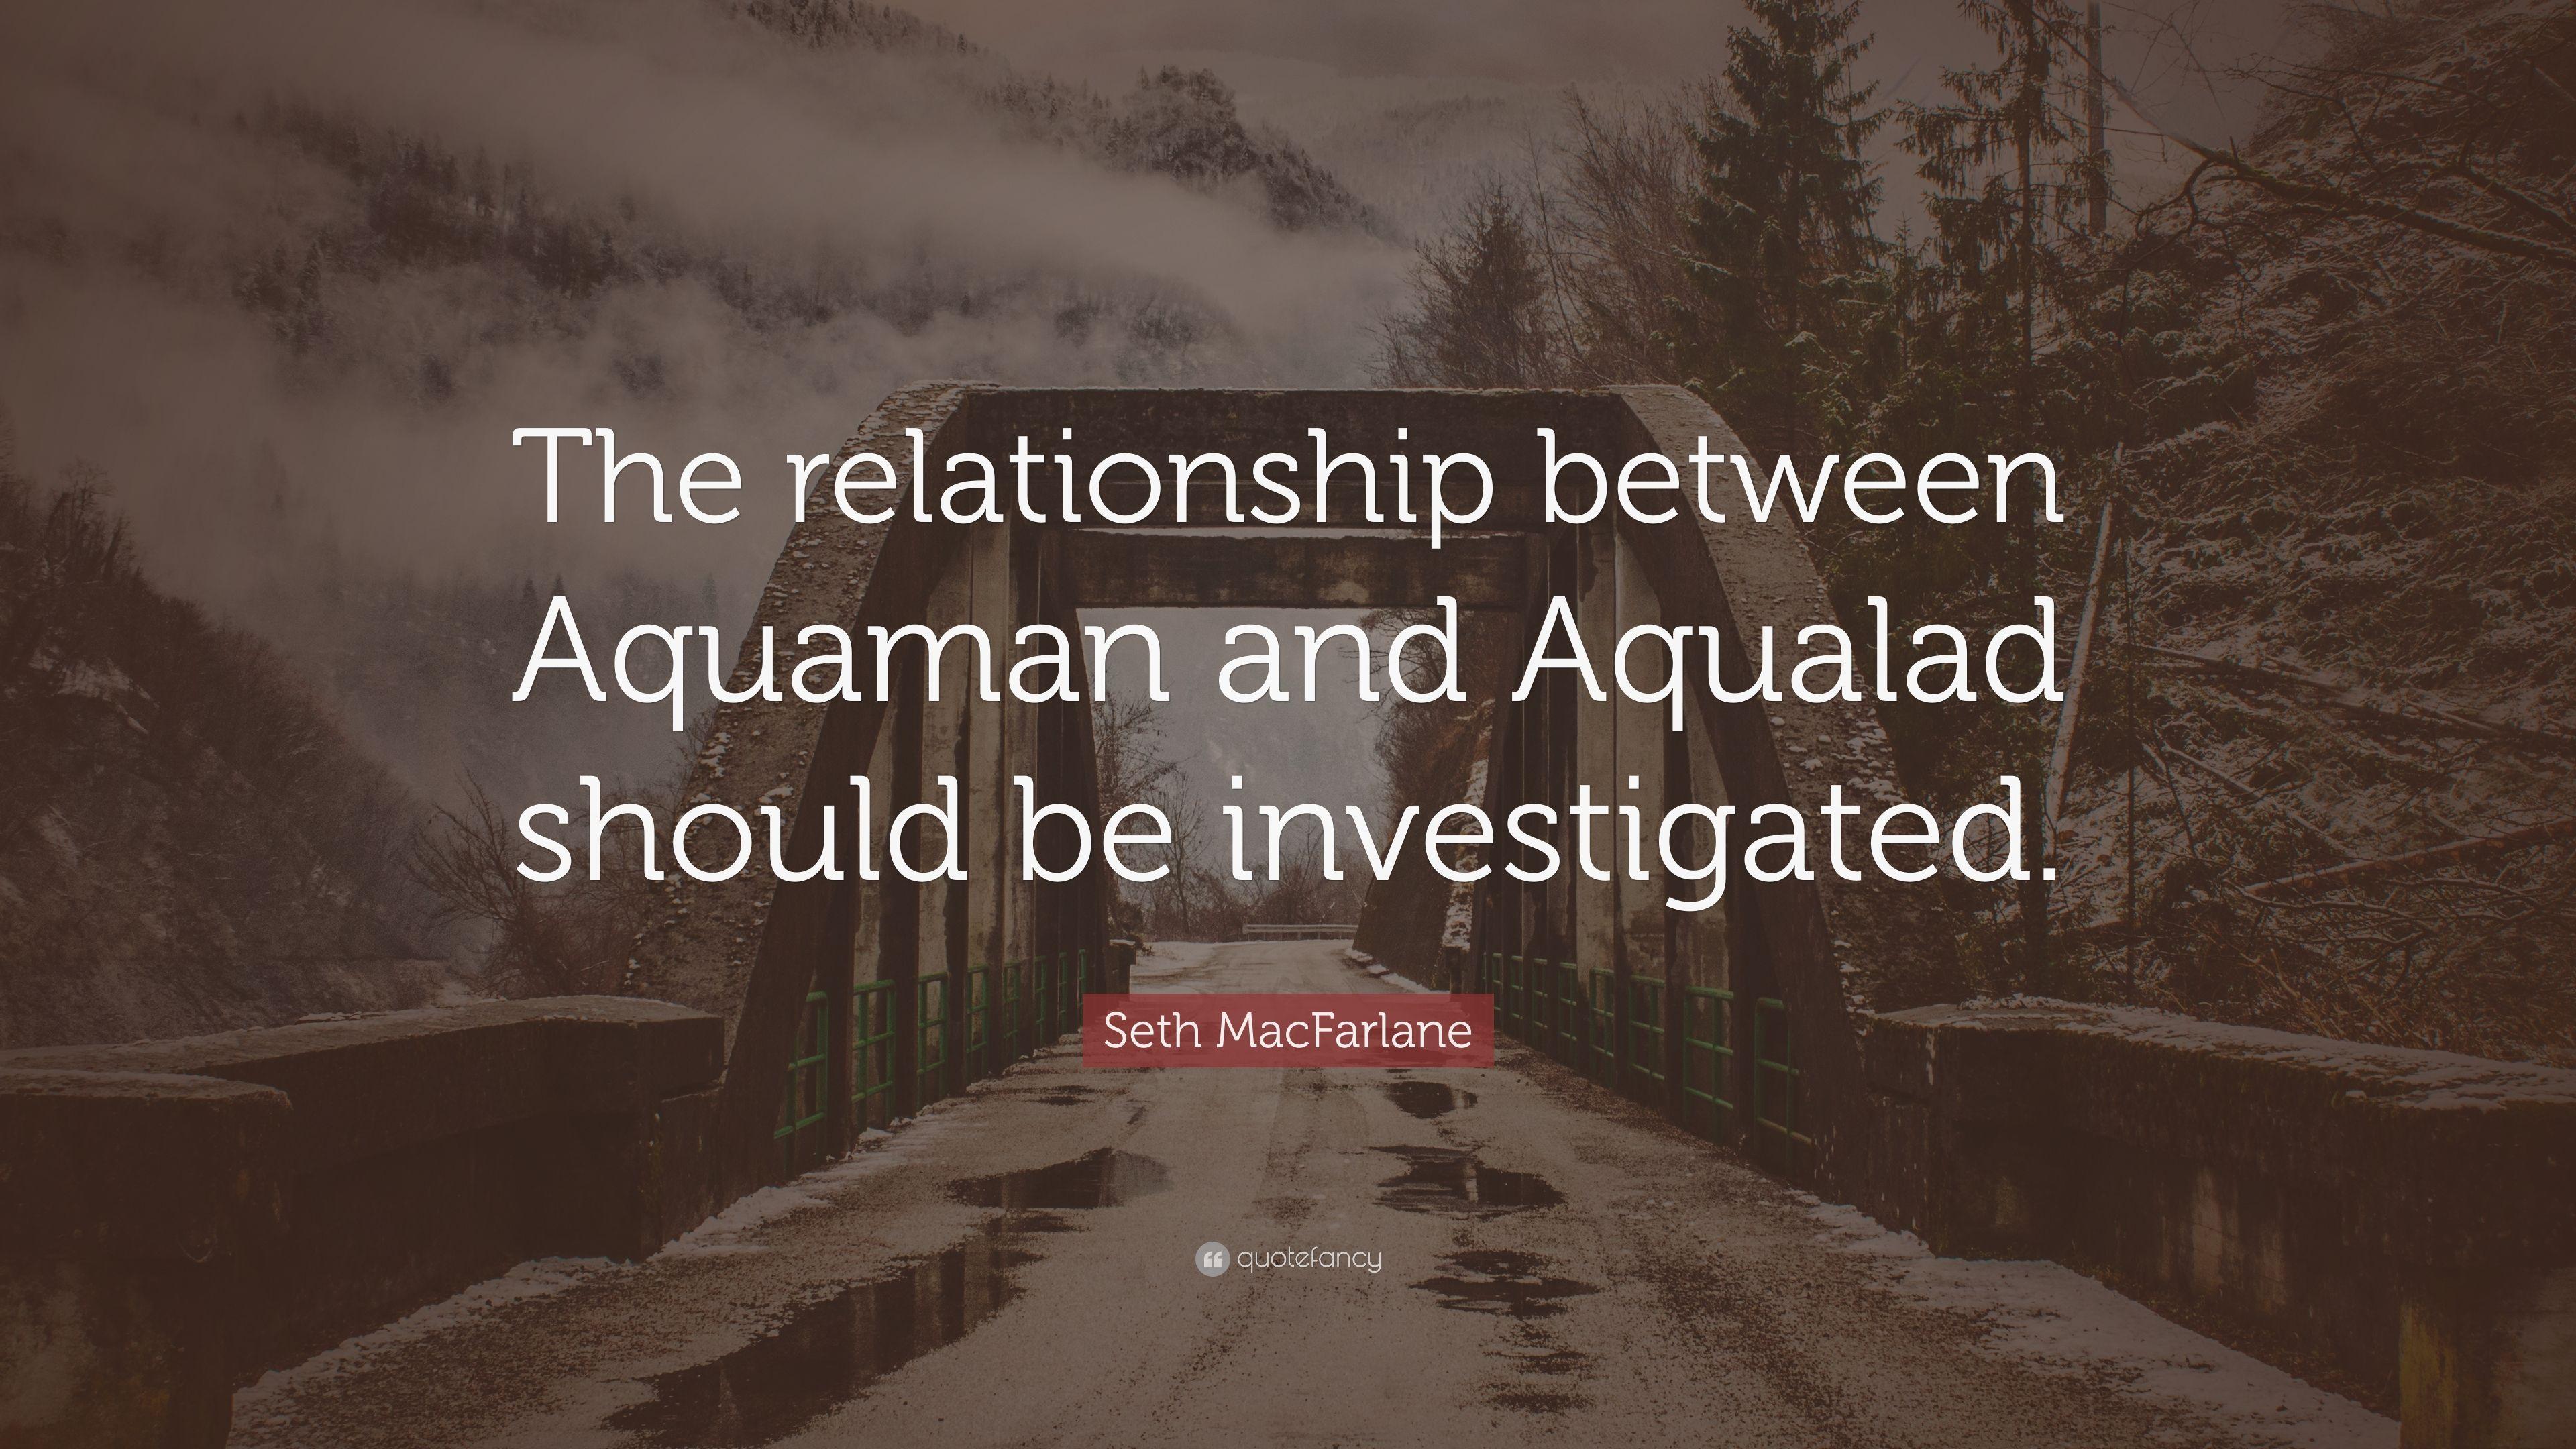 Seth MacFarlane Quote: “The relationship between Aquaman and Aqualad